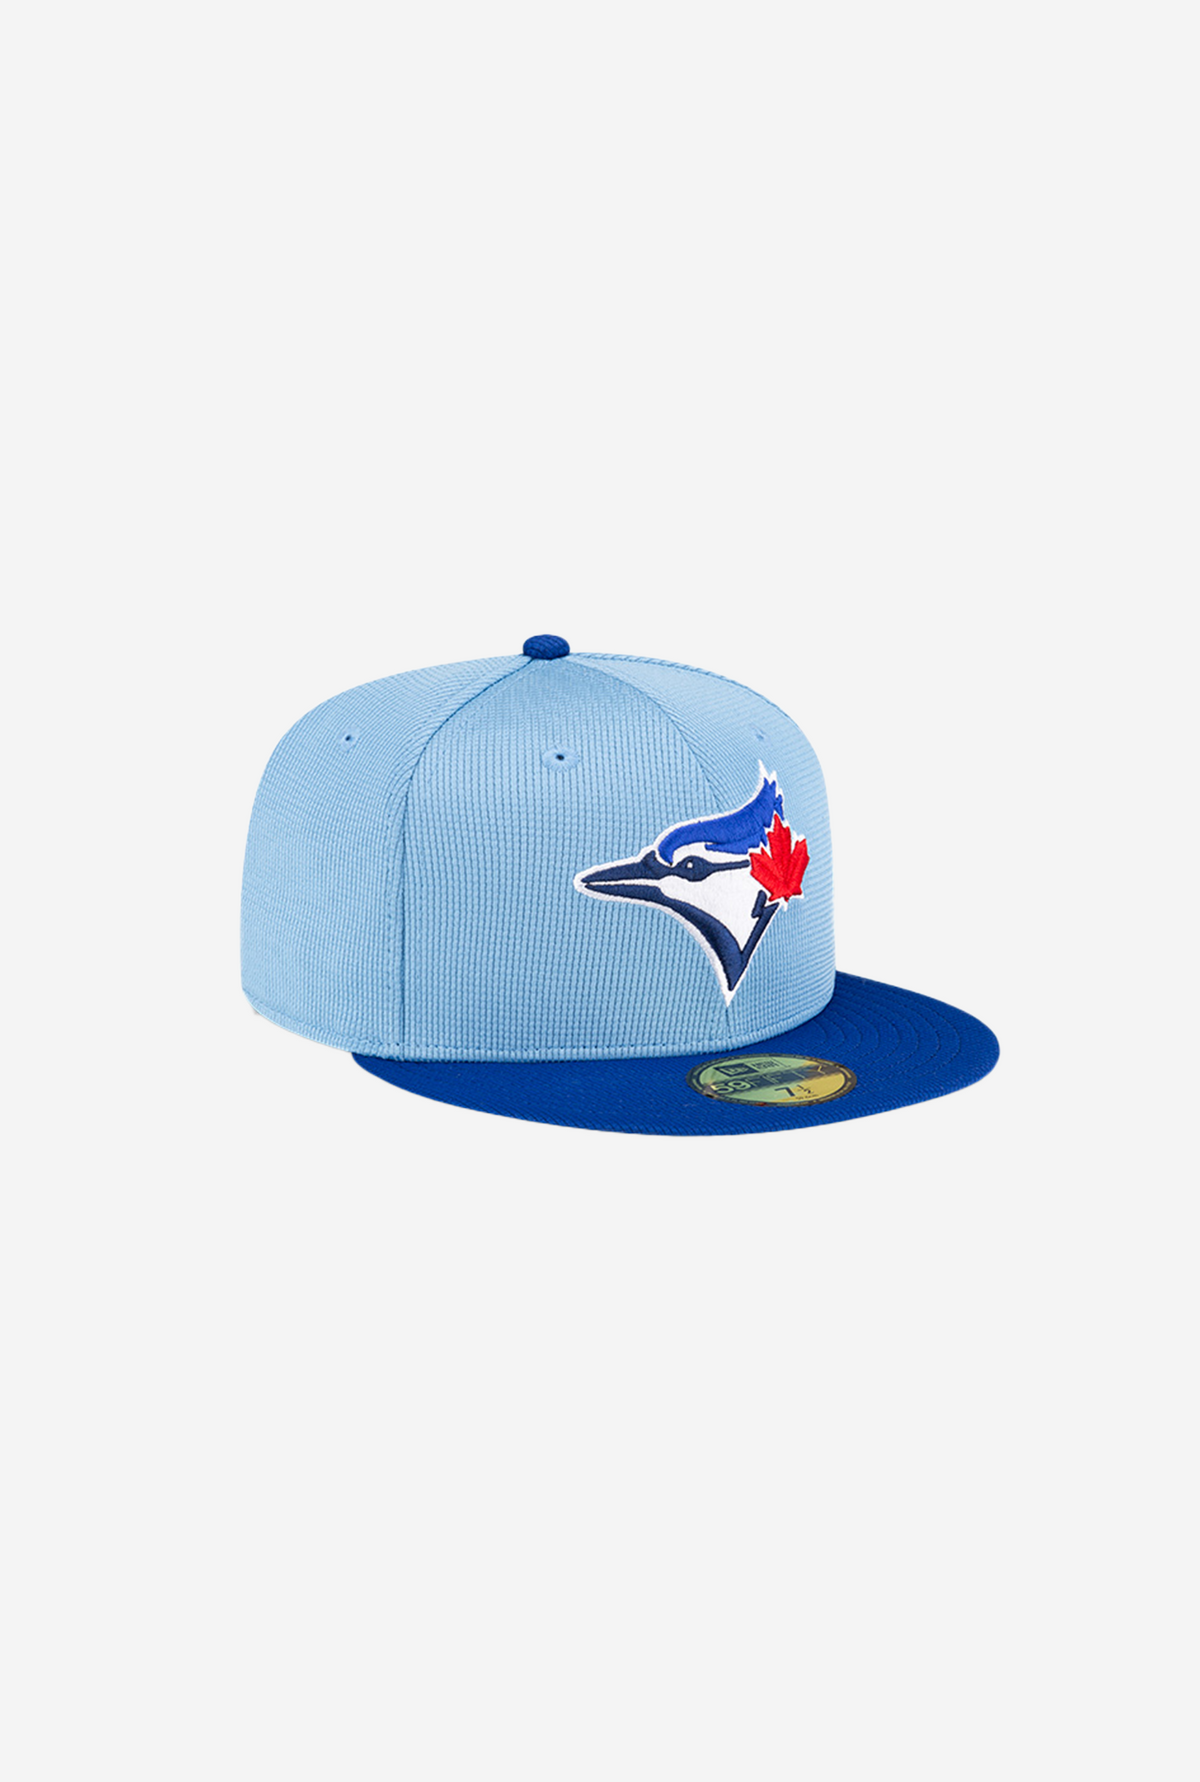 Toronto Blue Jays Spring Training 59FIFTY Batting Practice Hat